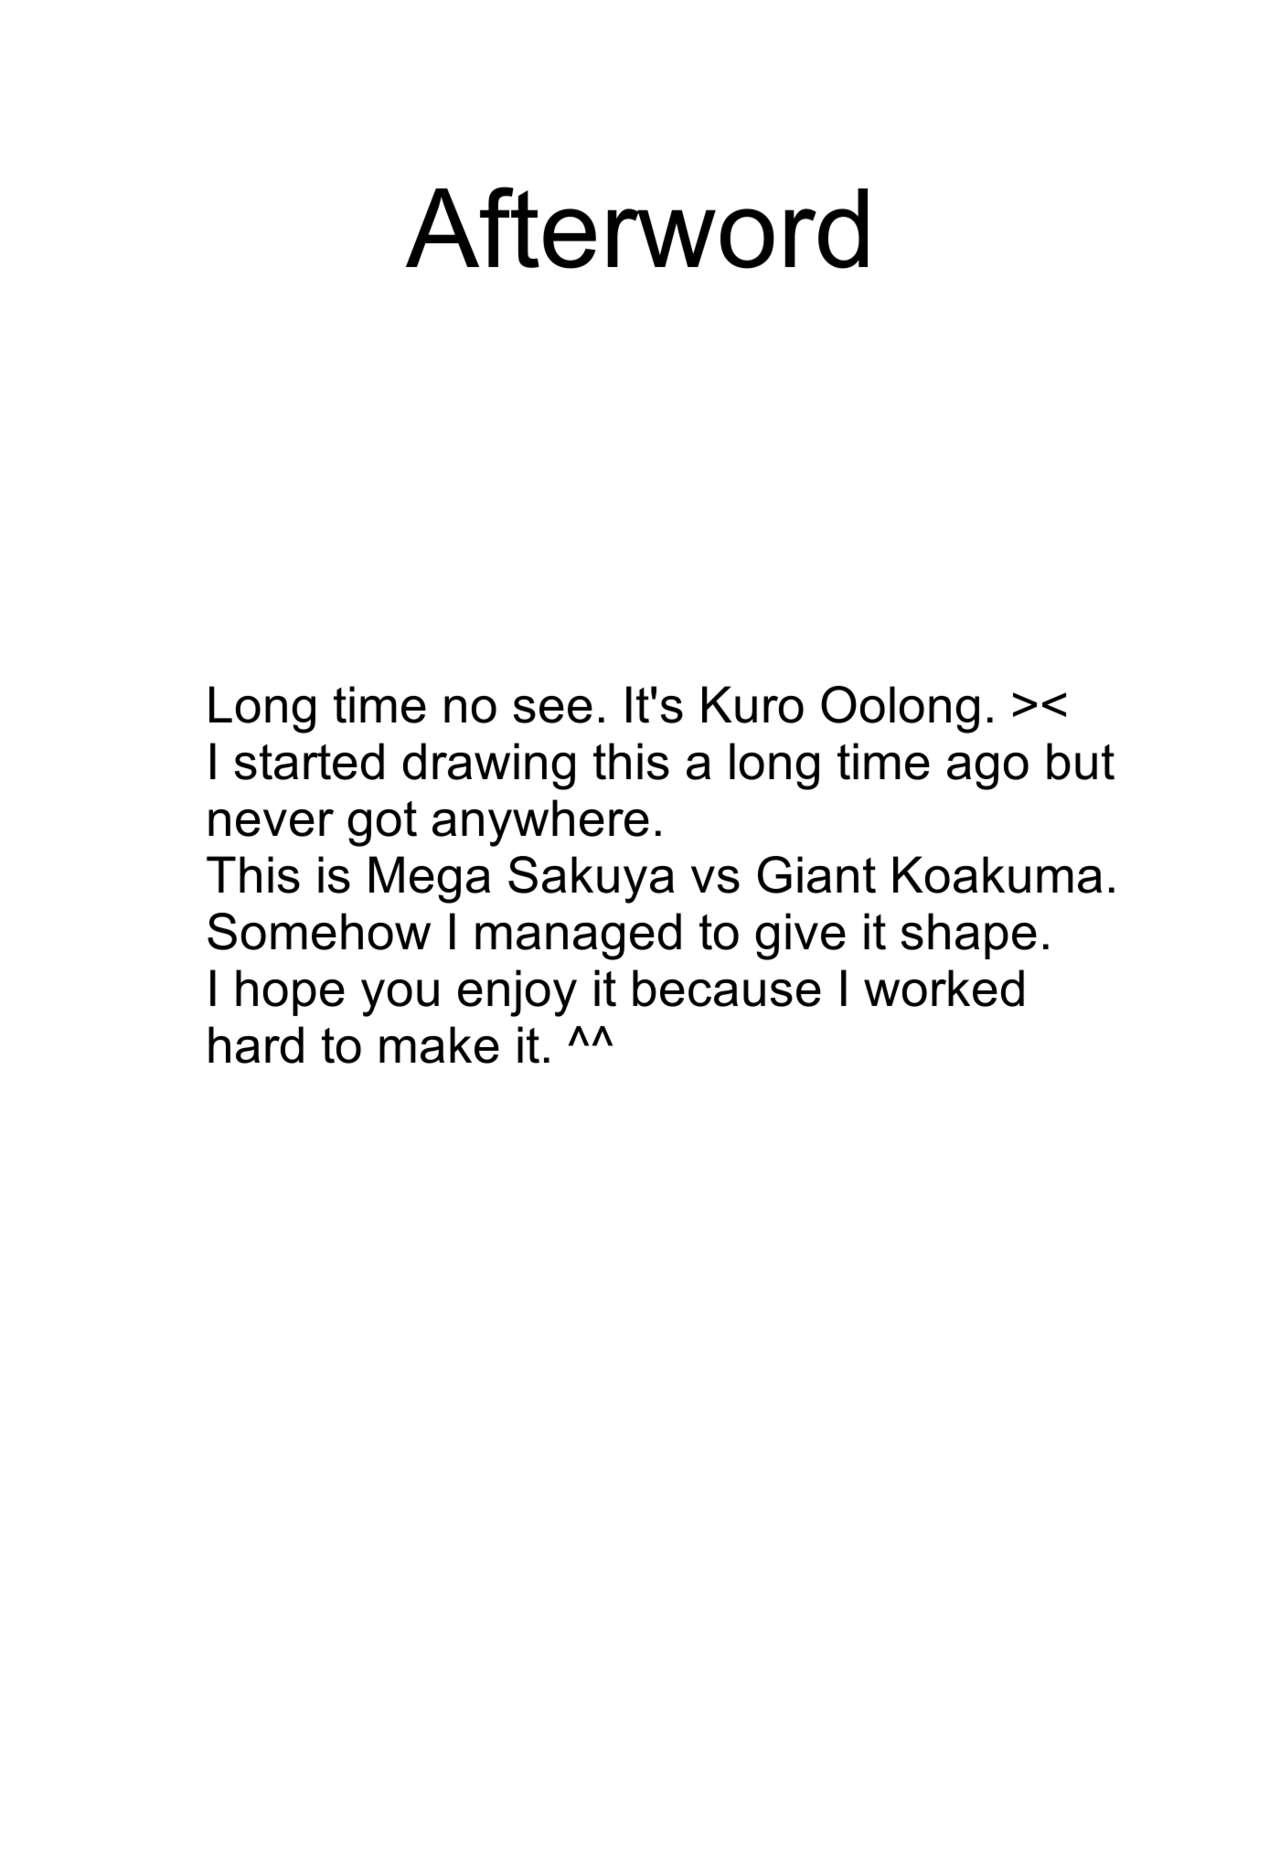 Mega Sakuya vs Giant Koakuma 19